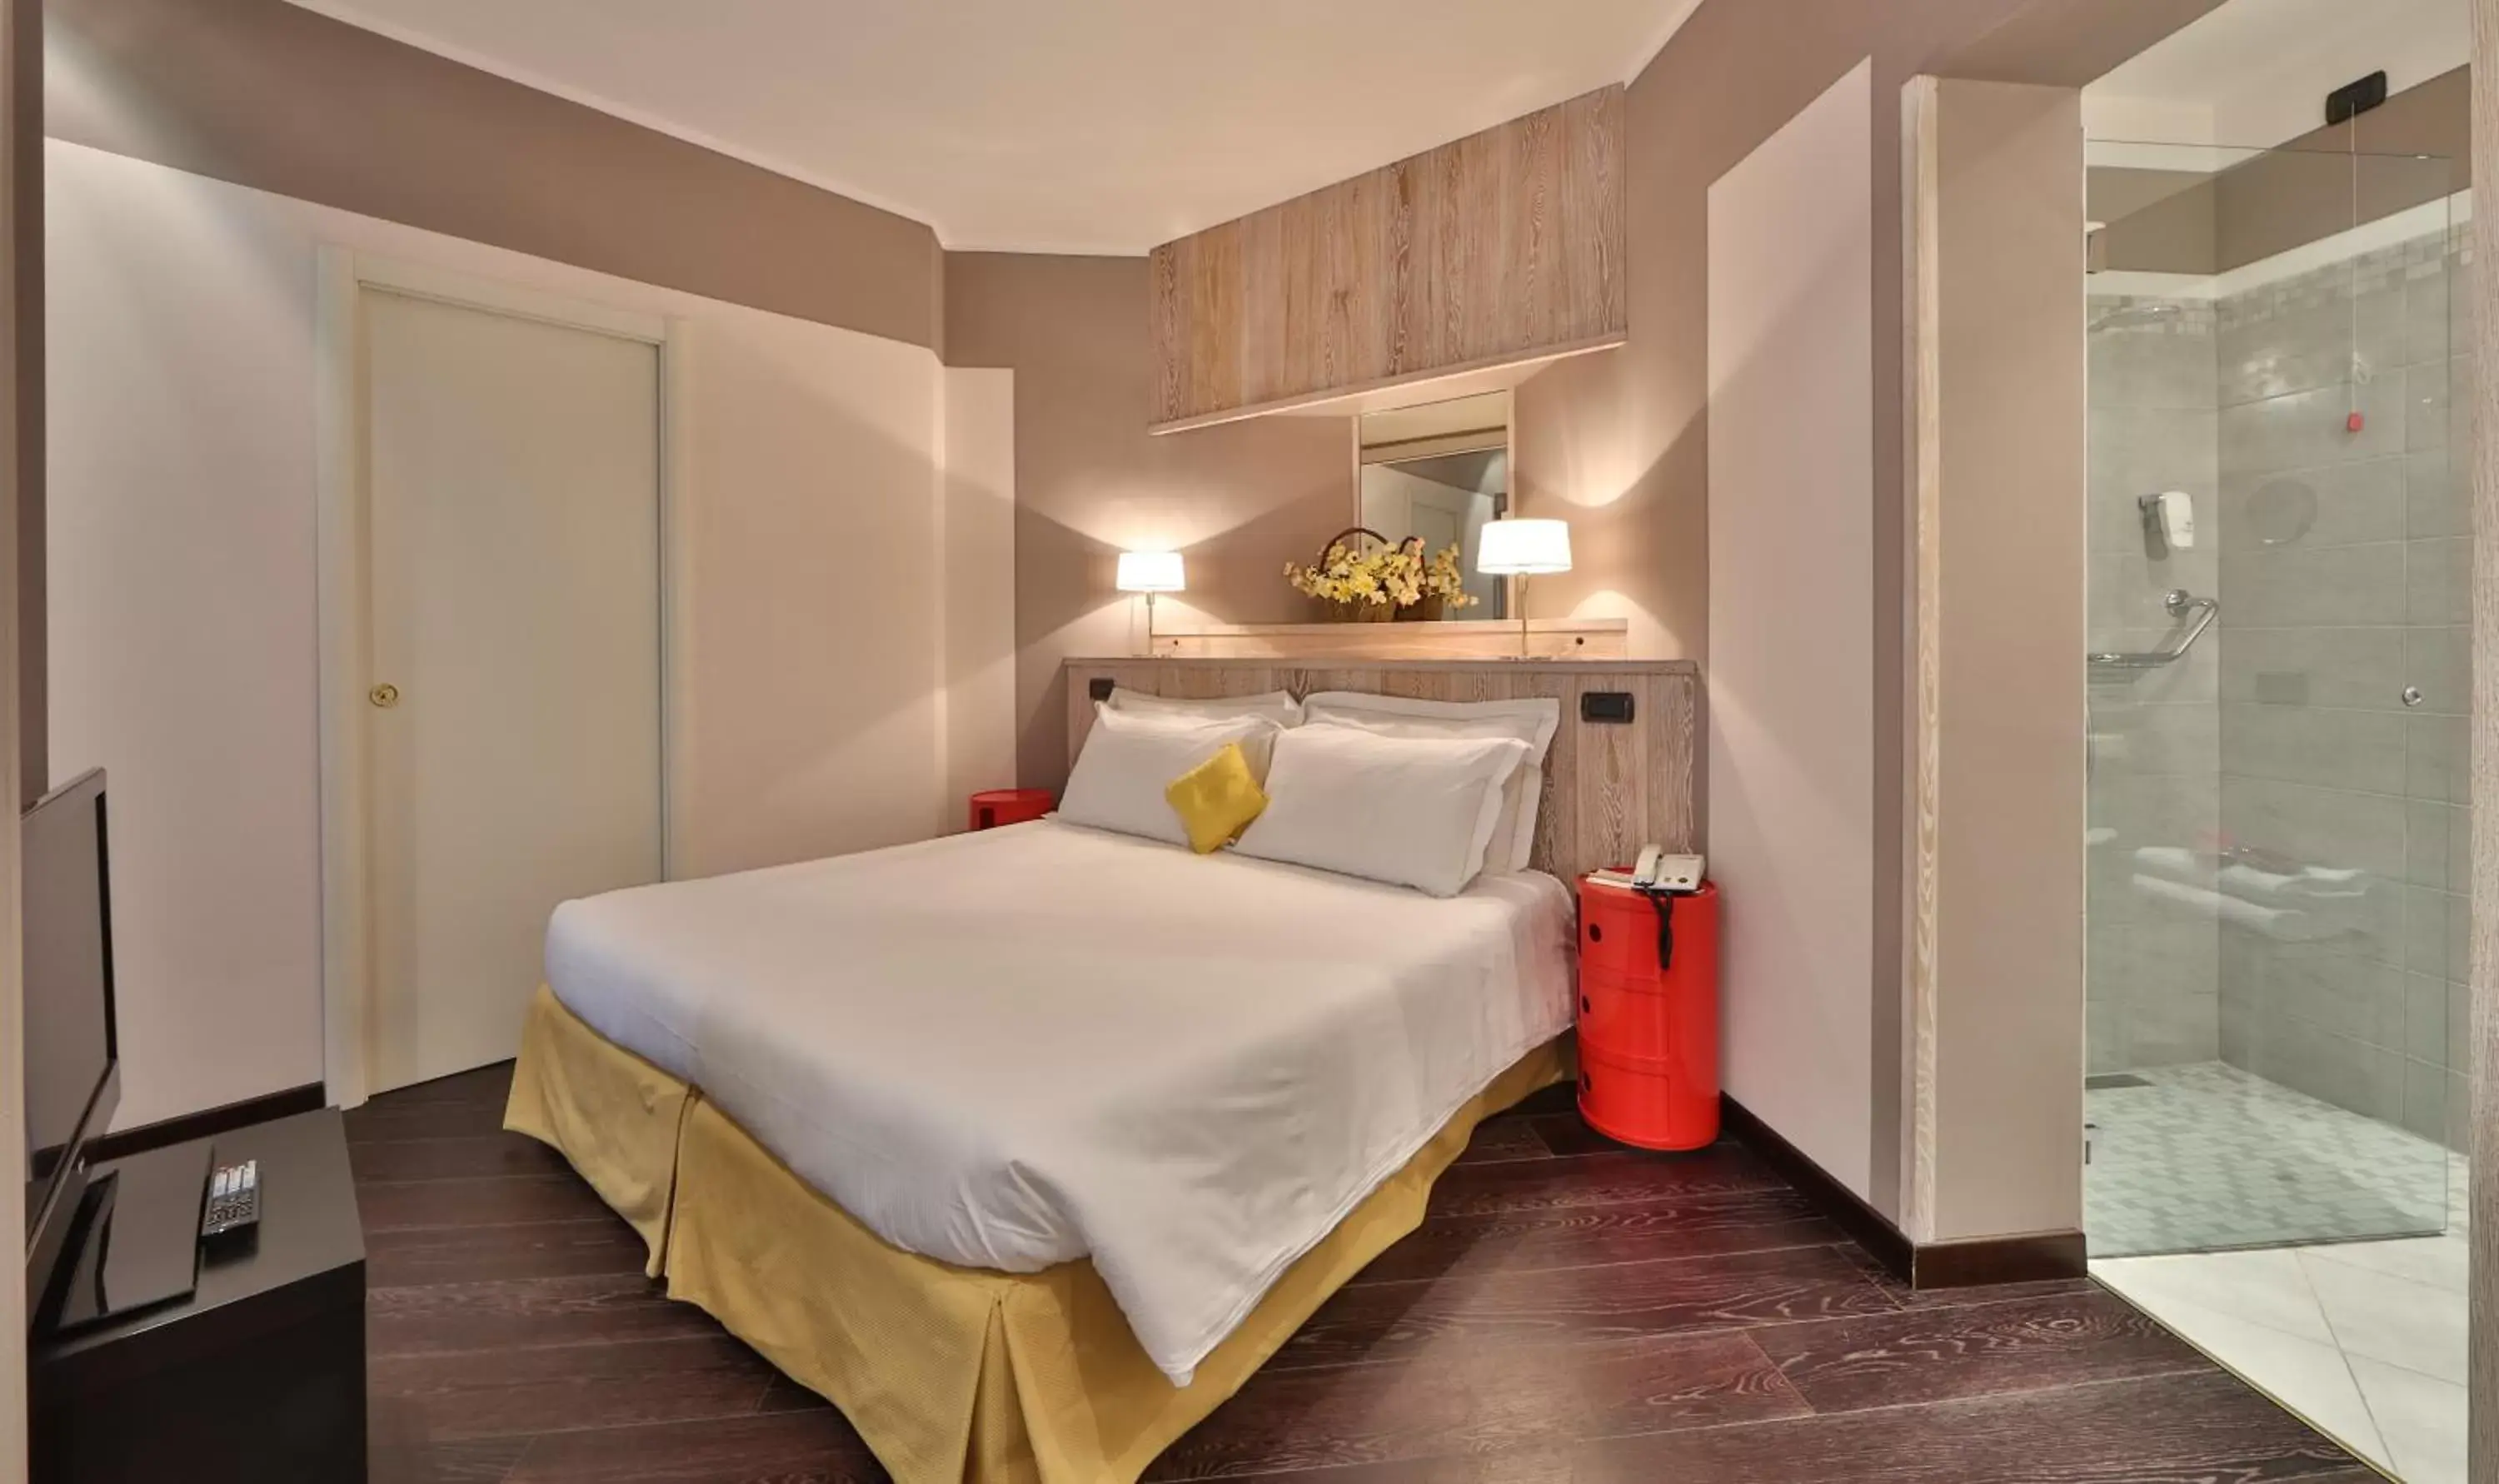 Shower, Room Photo in Hotel Alla Posta